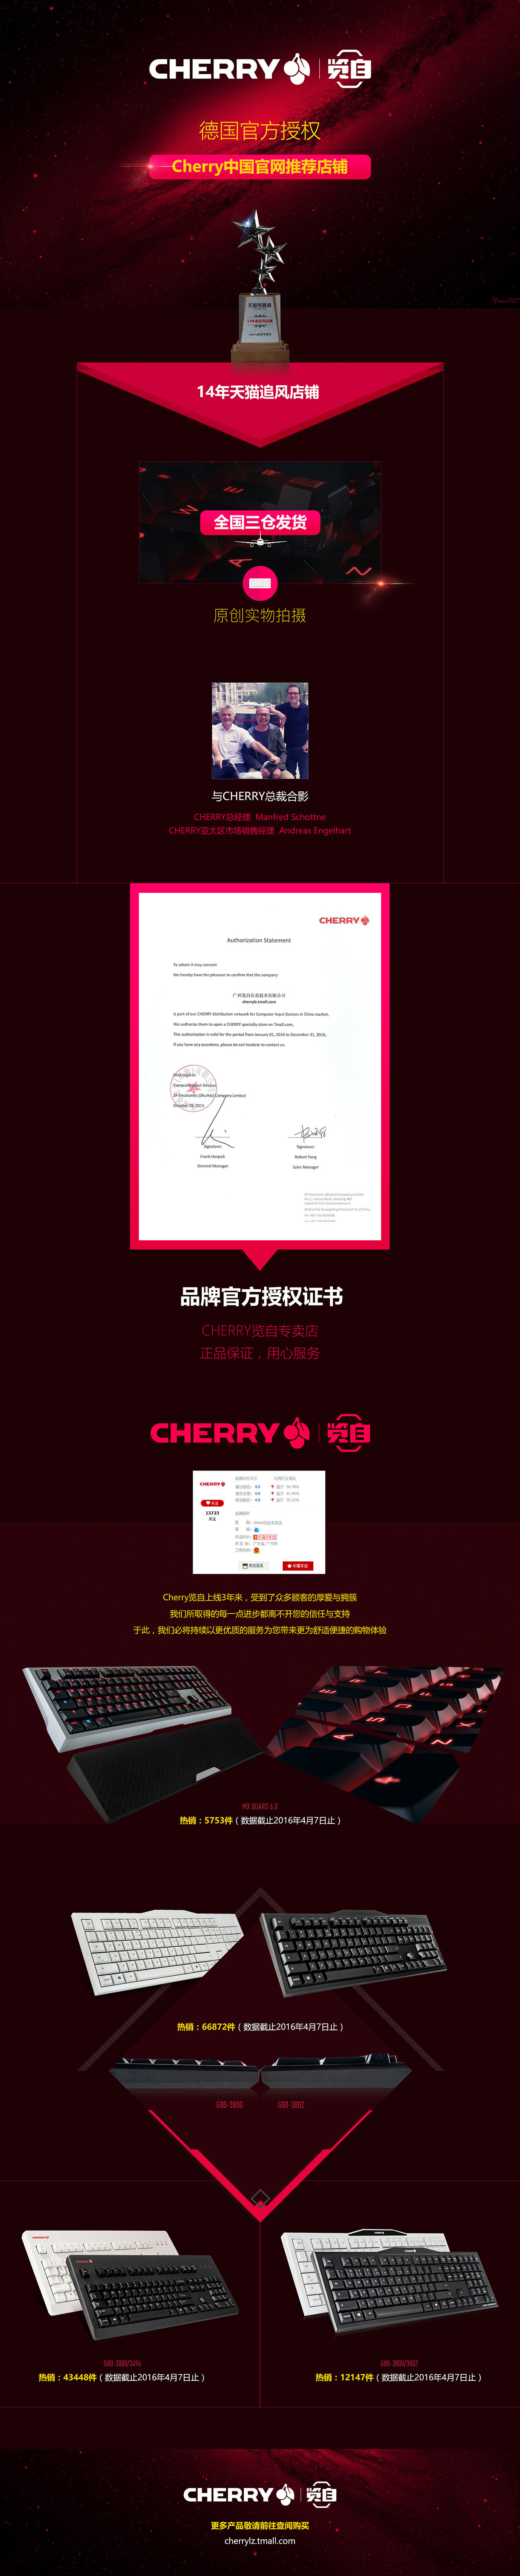 cherry官網壓縮.jpg